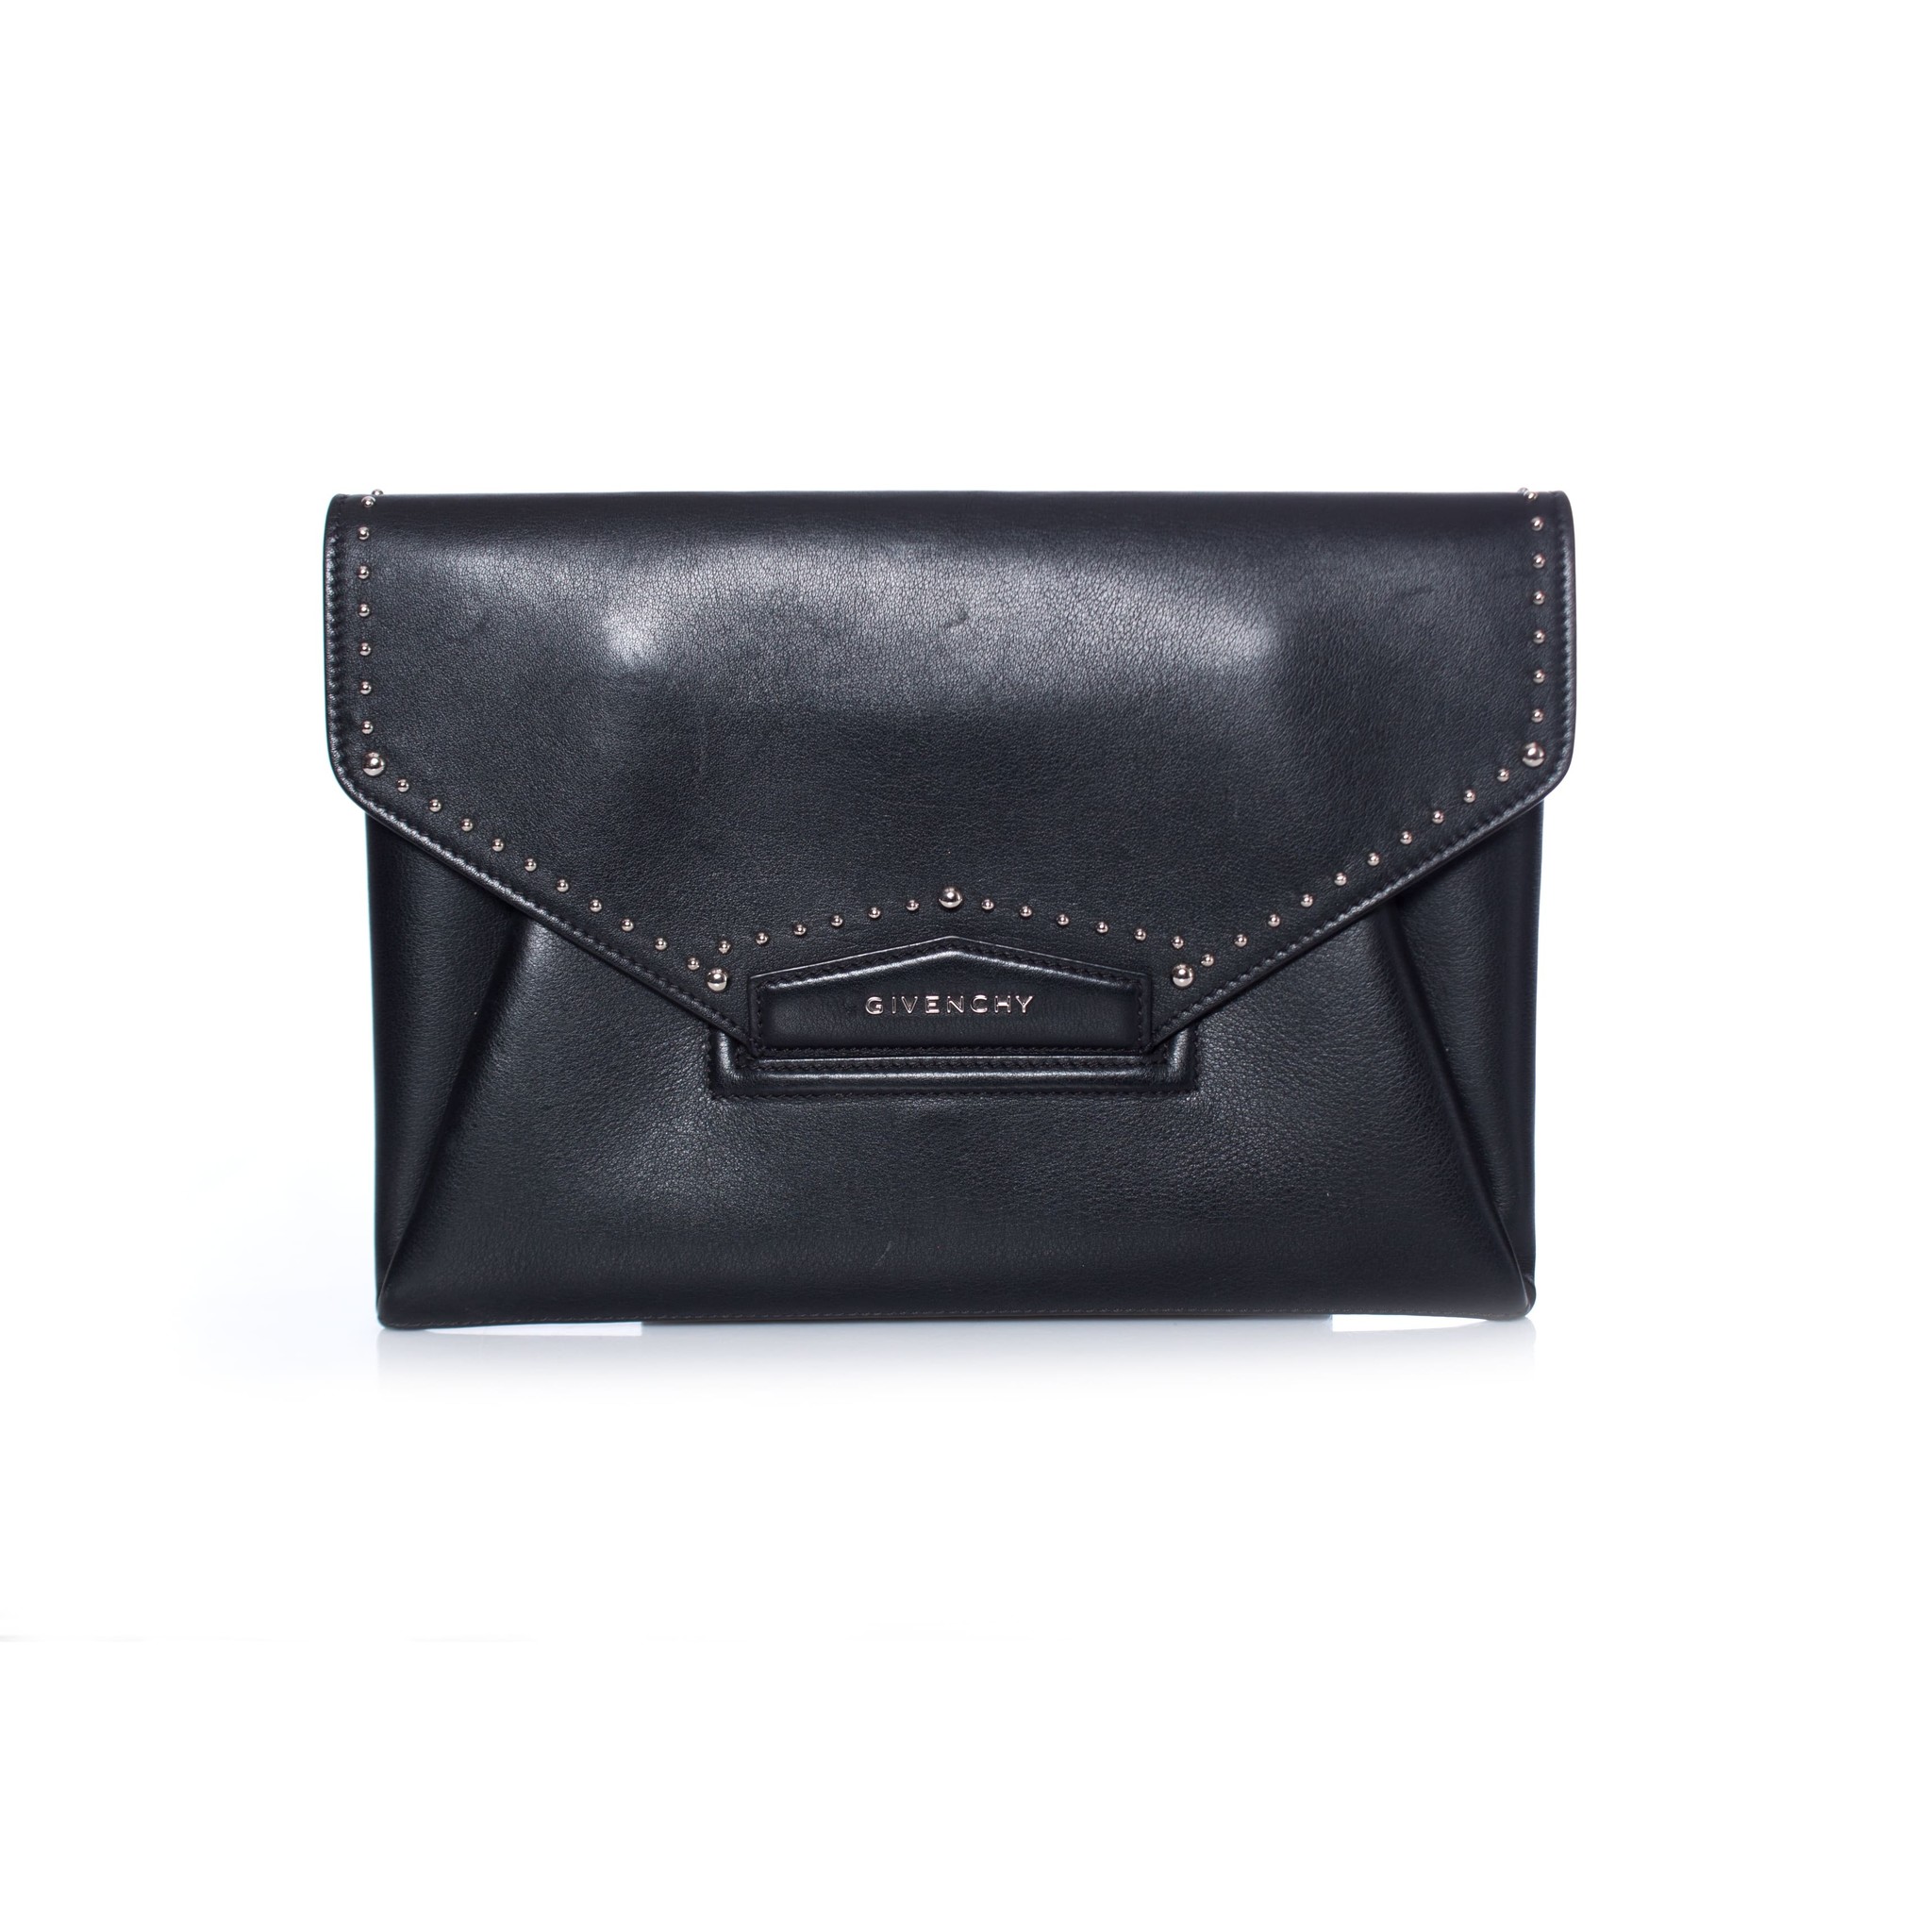 black leather givenchy bag